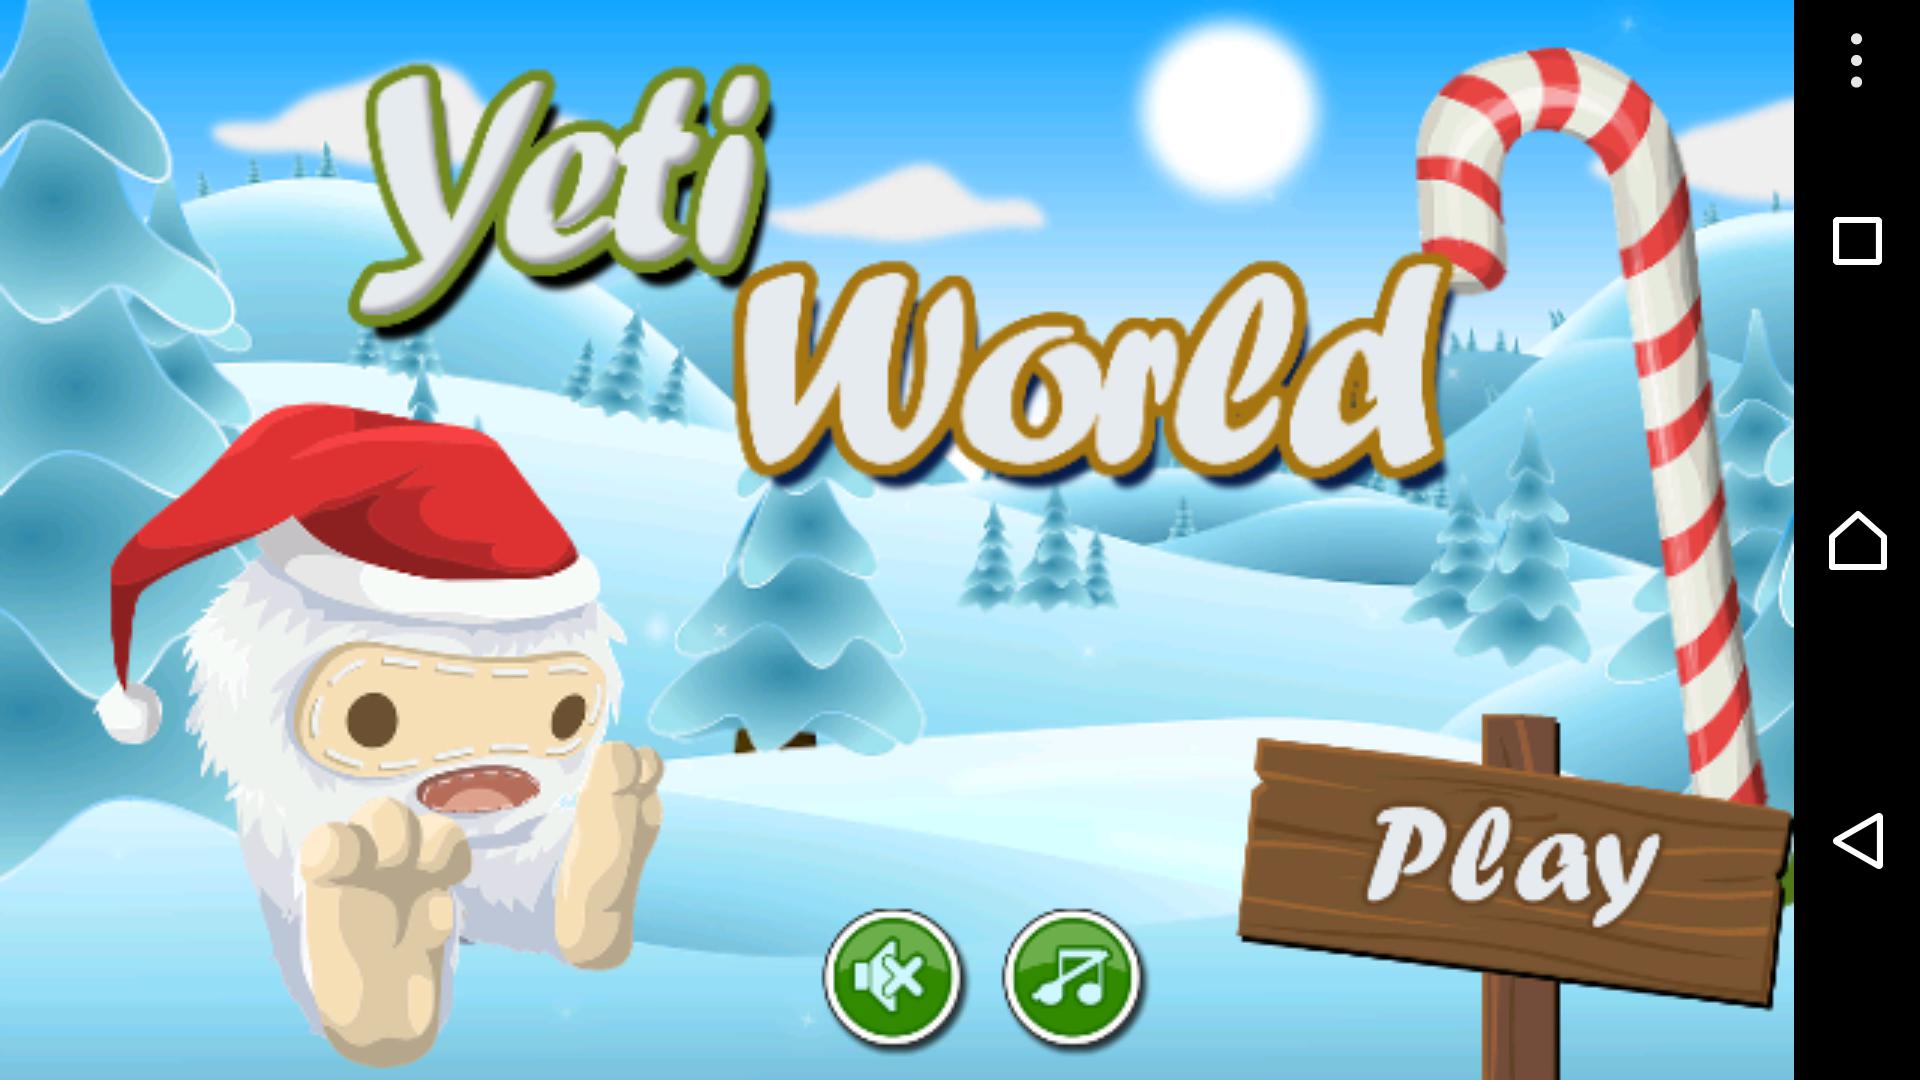 Yeti World Run -  La gran aventura